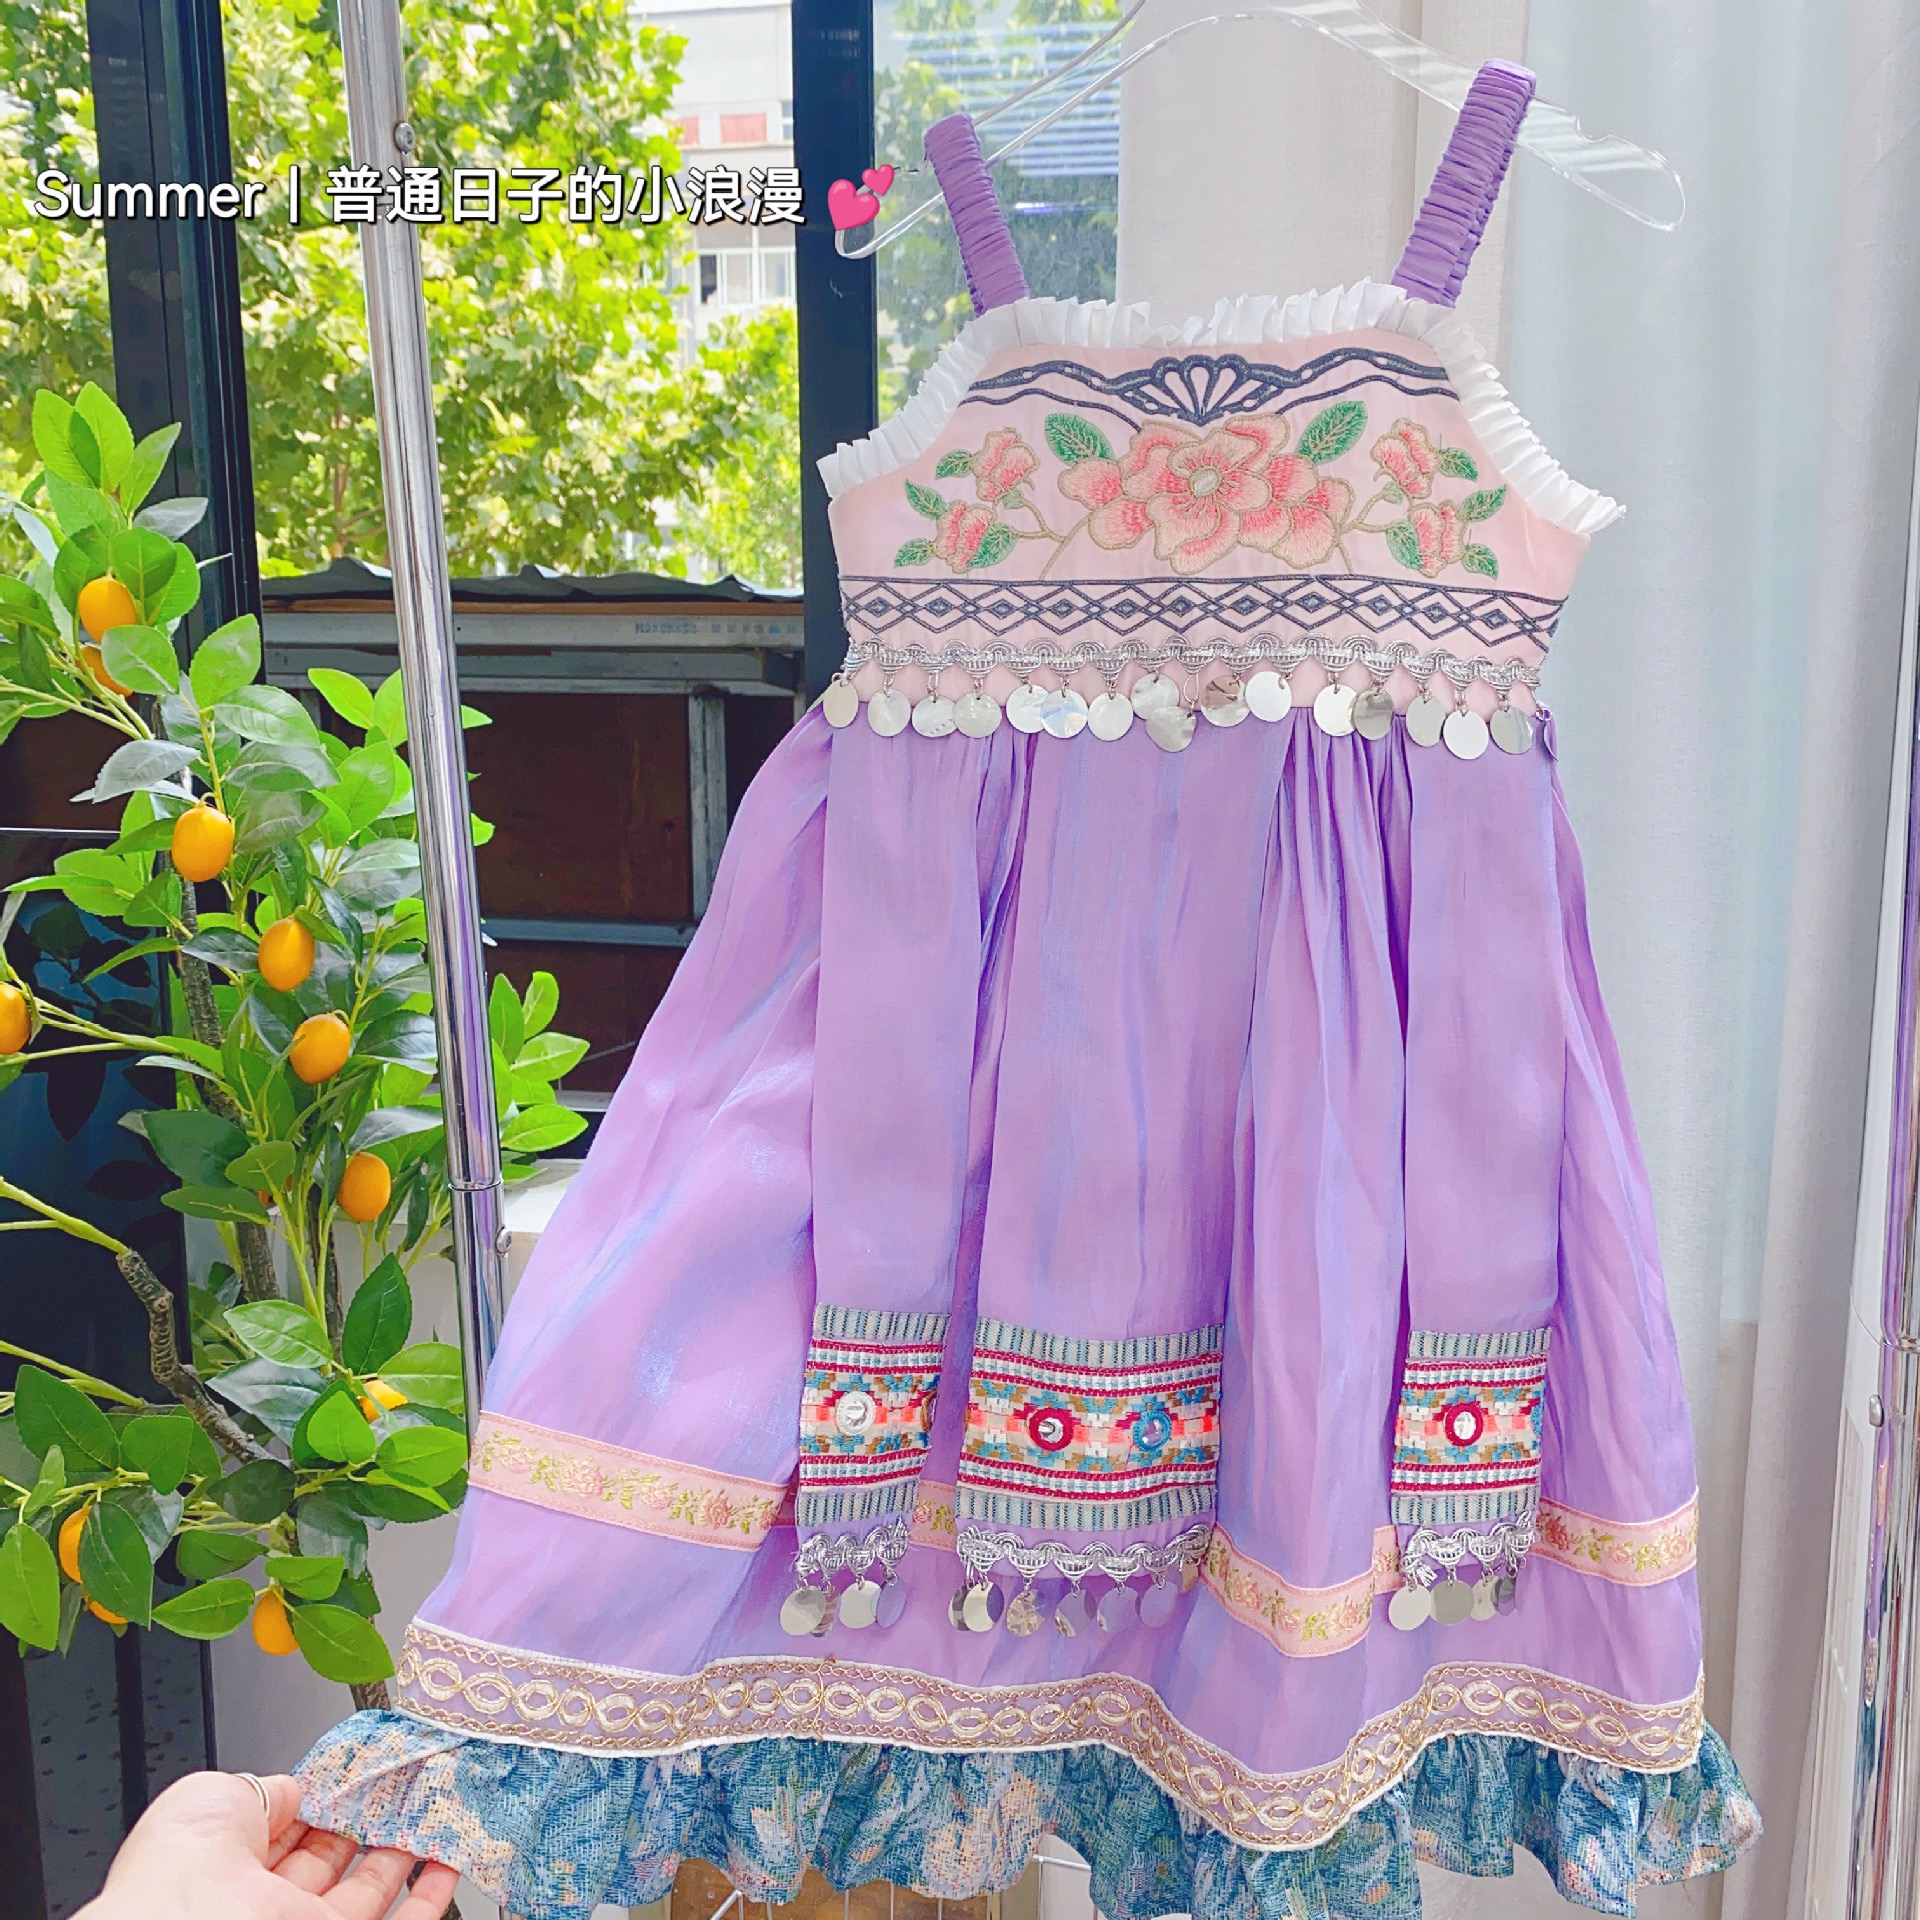 ethnic style mesh slip dress pink casual kids' Children Butterfly Wings Dress